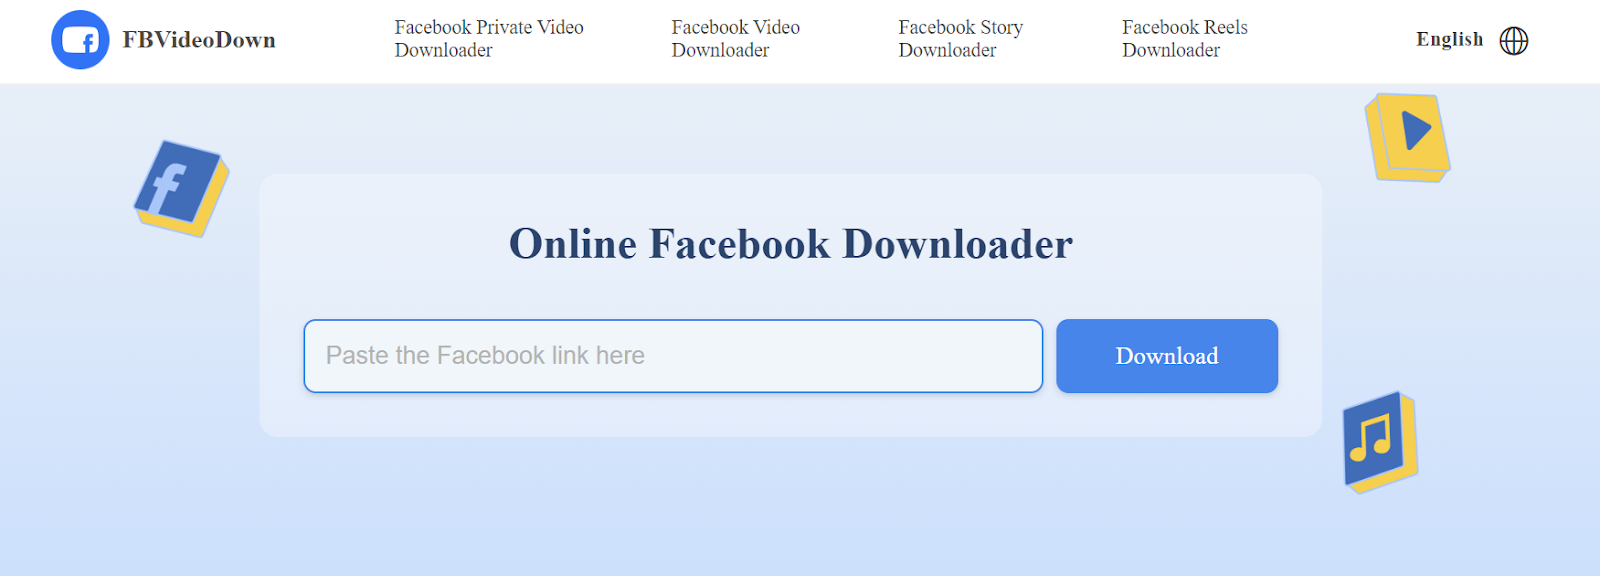 FBVideoDown - The Best Way To Download Facebook Videos Online